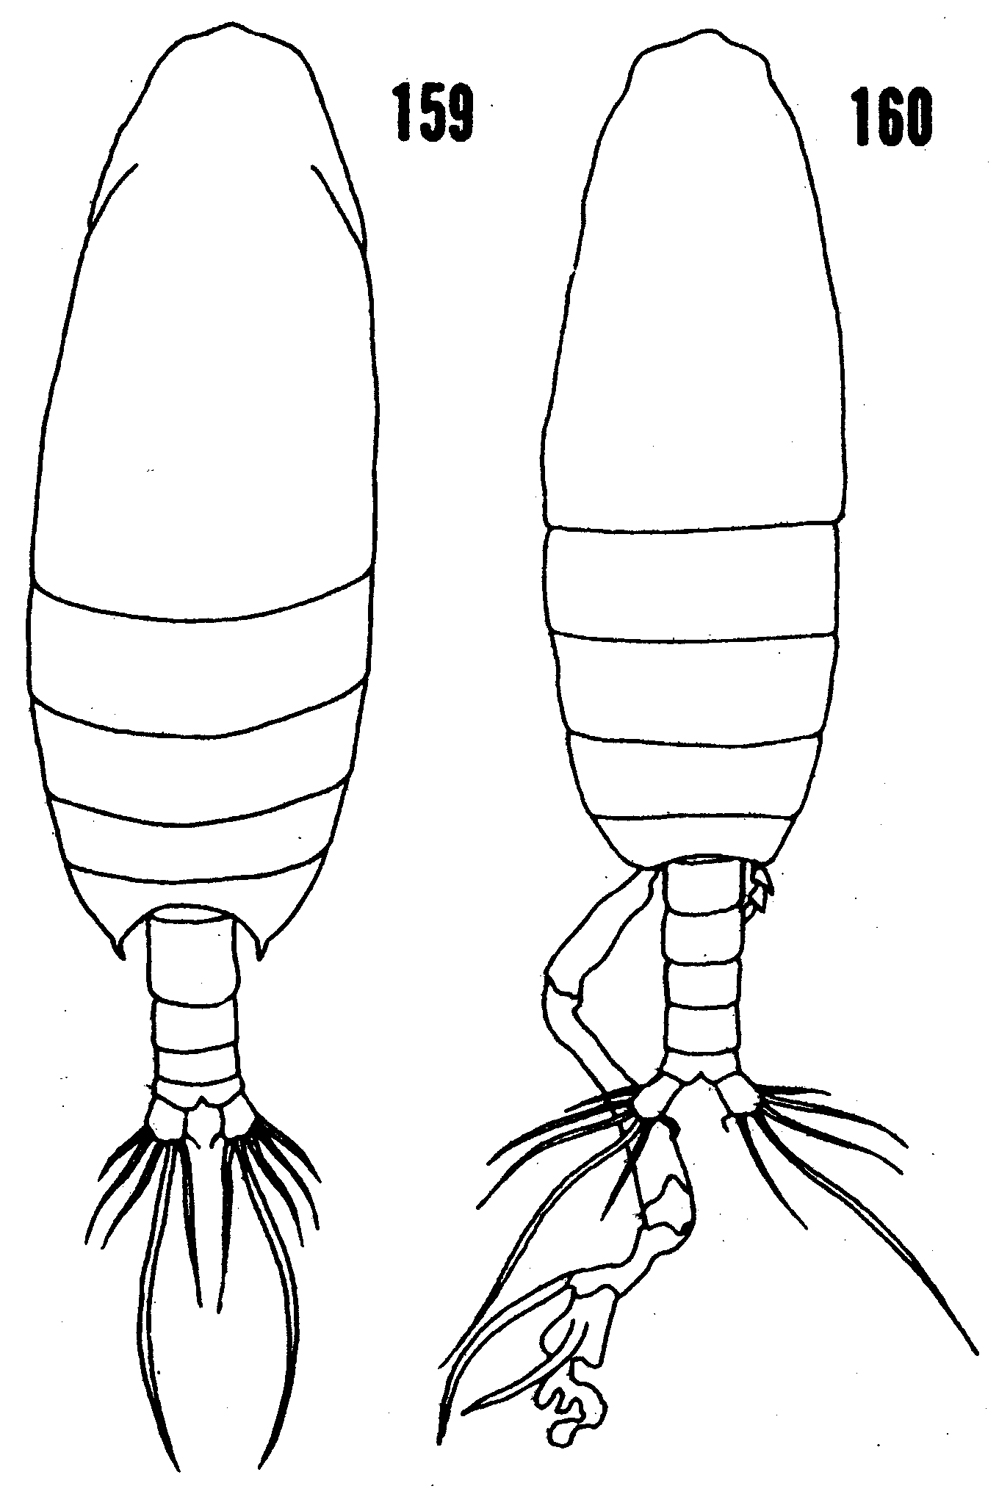 Species Undinula vulgaris - Plate 21 of morphological figures